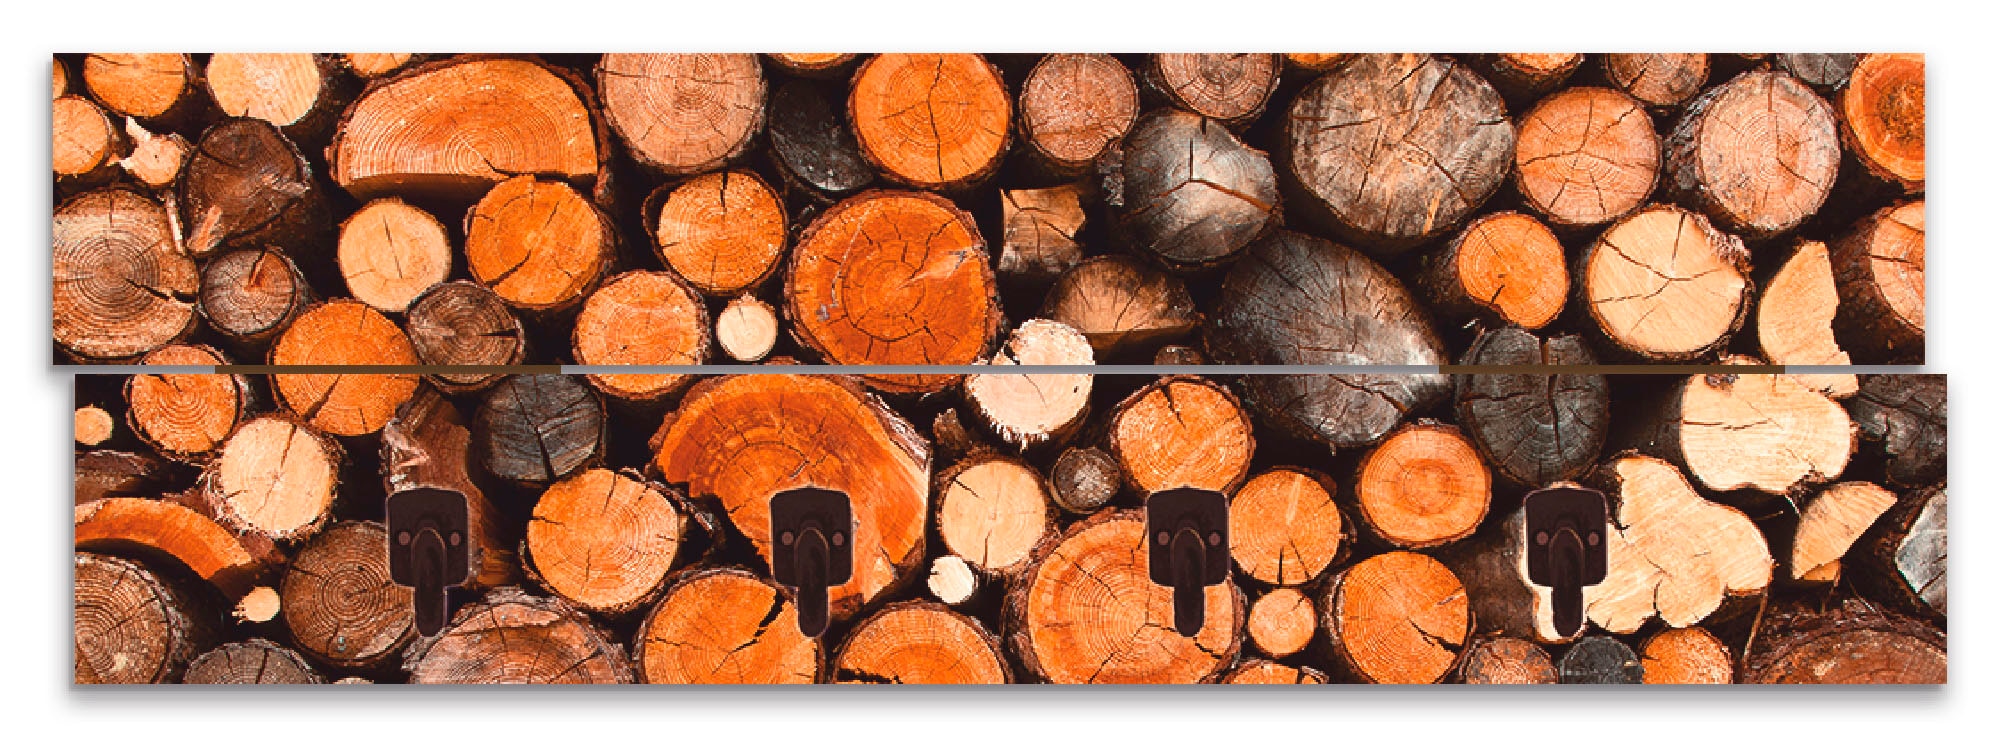 Artland Garderobenleiste »Geschichtetes Feuerholz«, teilmontiert